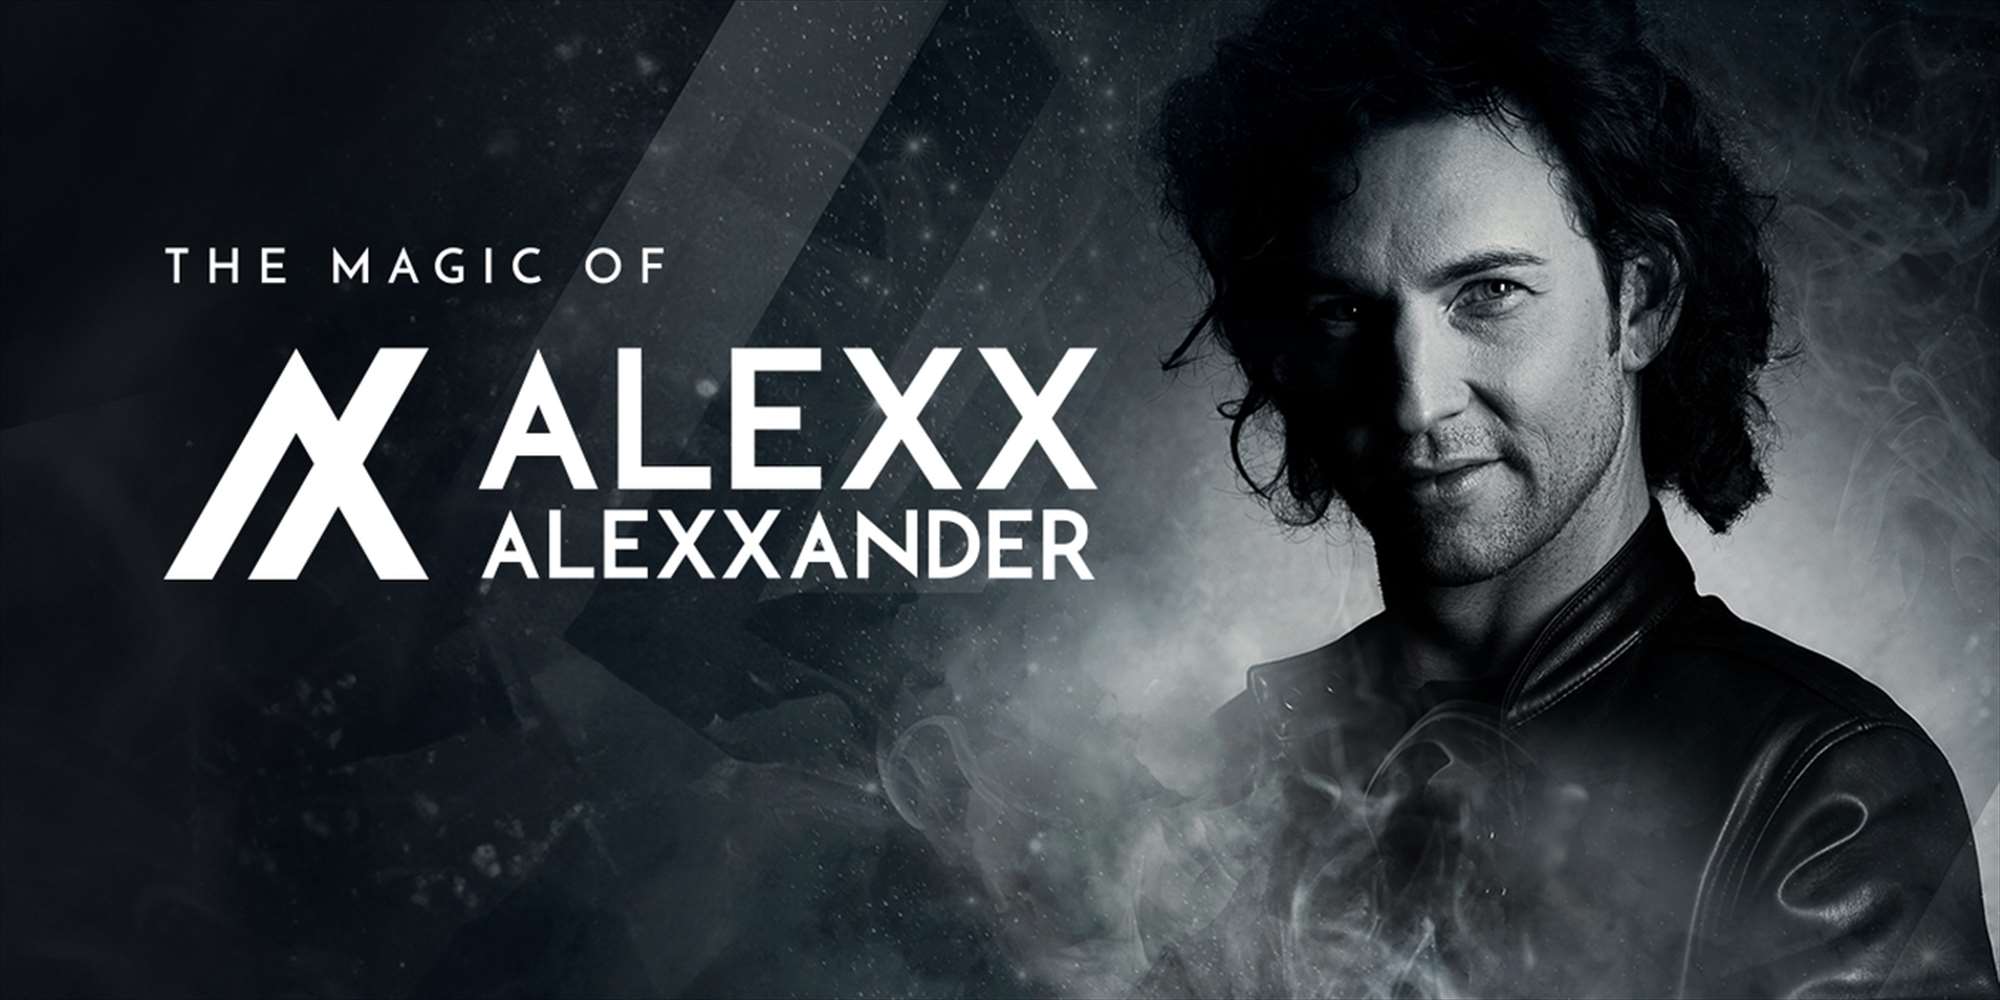 THE MAGIC OF ALEXX ALEXXANDER 2.0